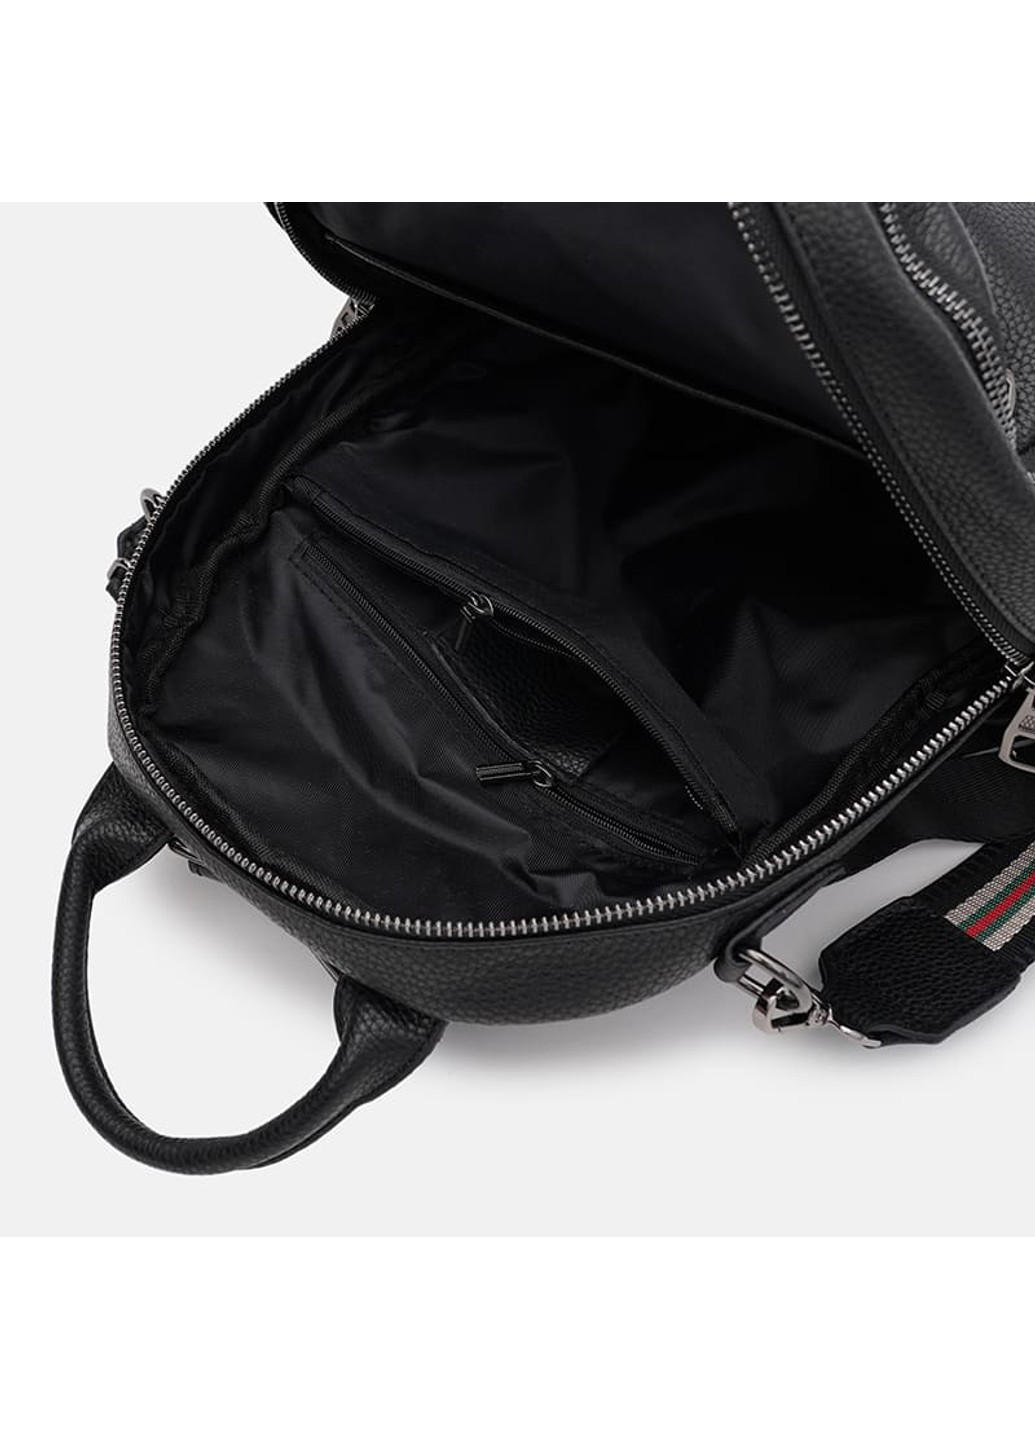 Женский кожаный рюкзак K18095bl-black Ricco Grande (271665118)